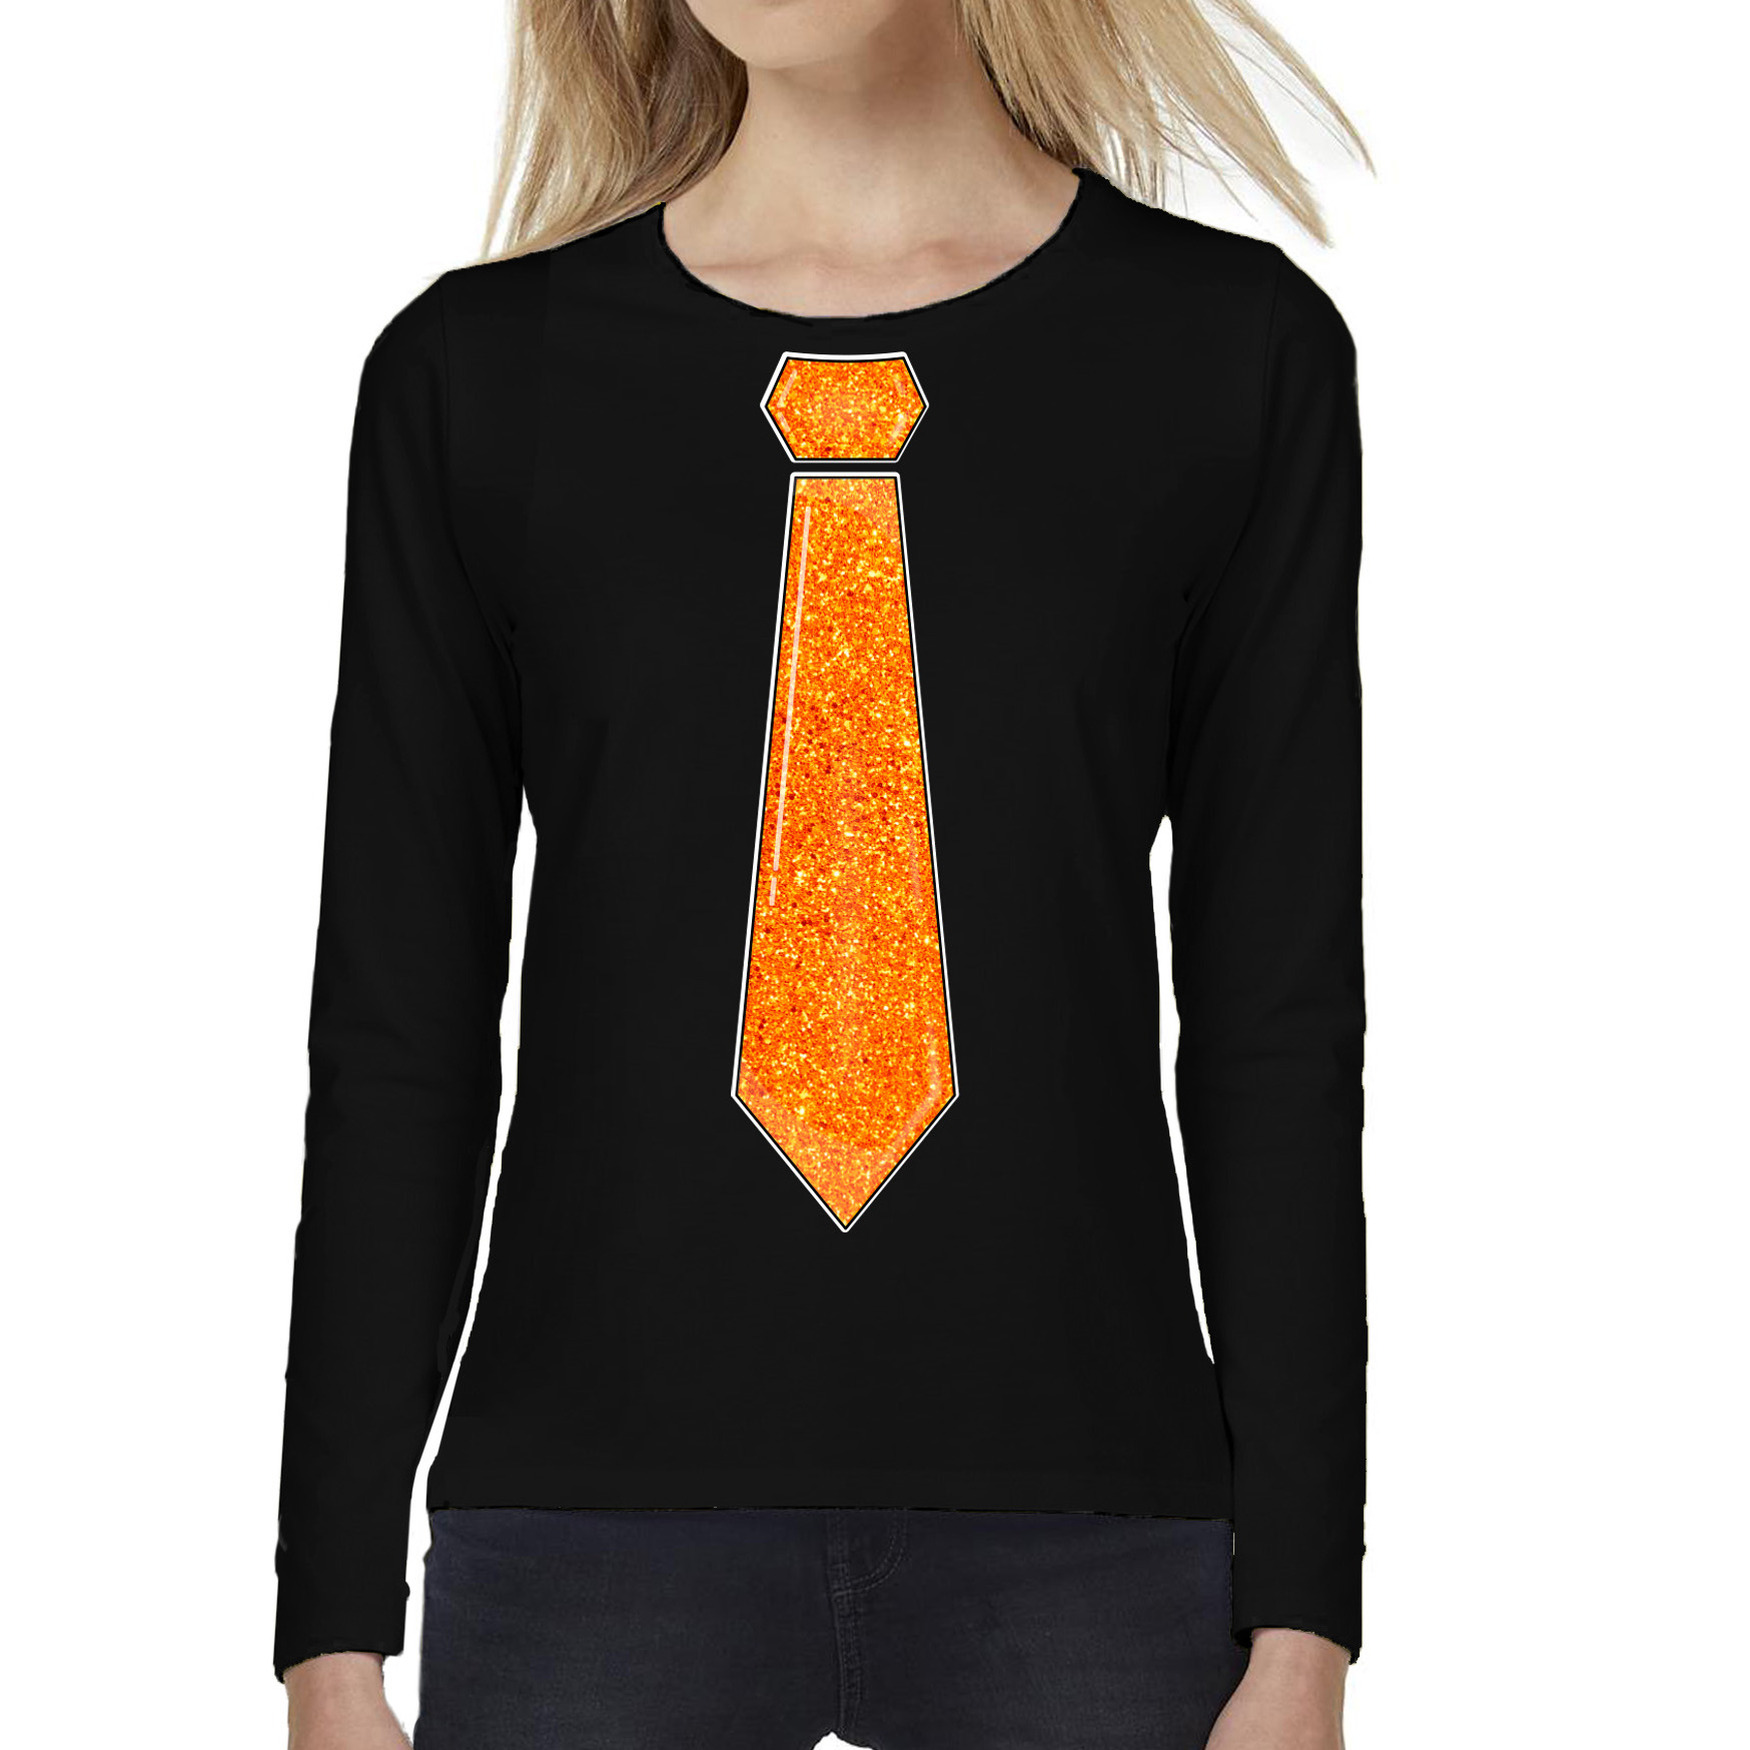 Verkleed shirt voor dames stropdas oranje zwart carnaval foute party longsleeve